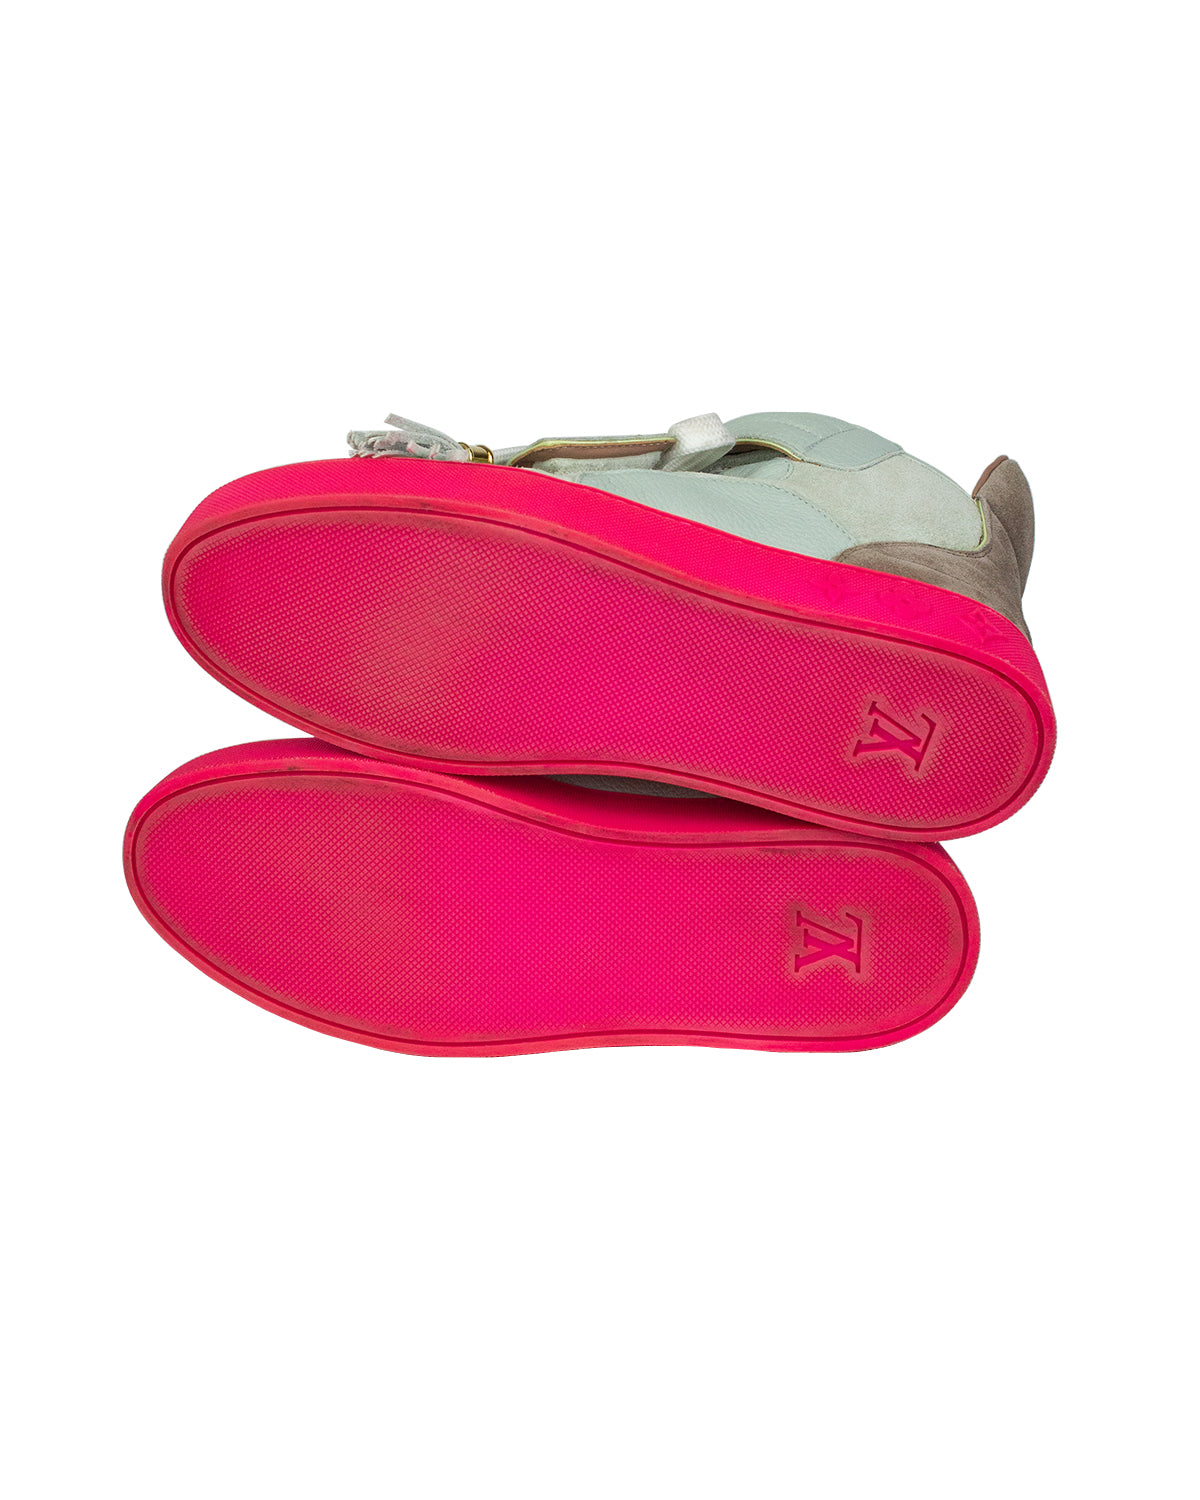 KANYE WEST X Louis Vuitton Jasper Patchwork Sneakers Sz LV 6.5